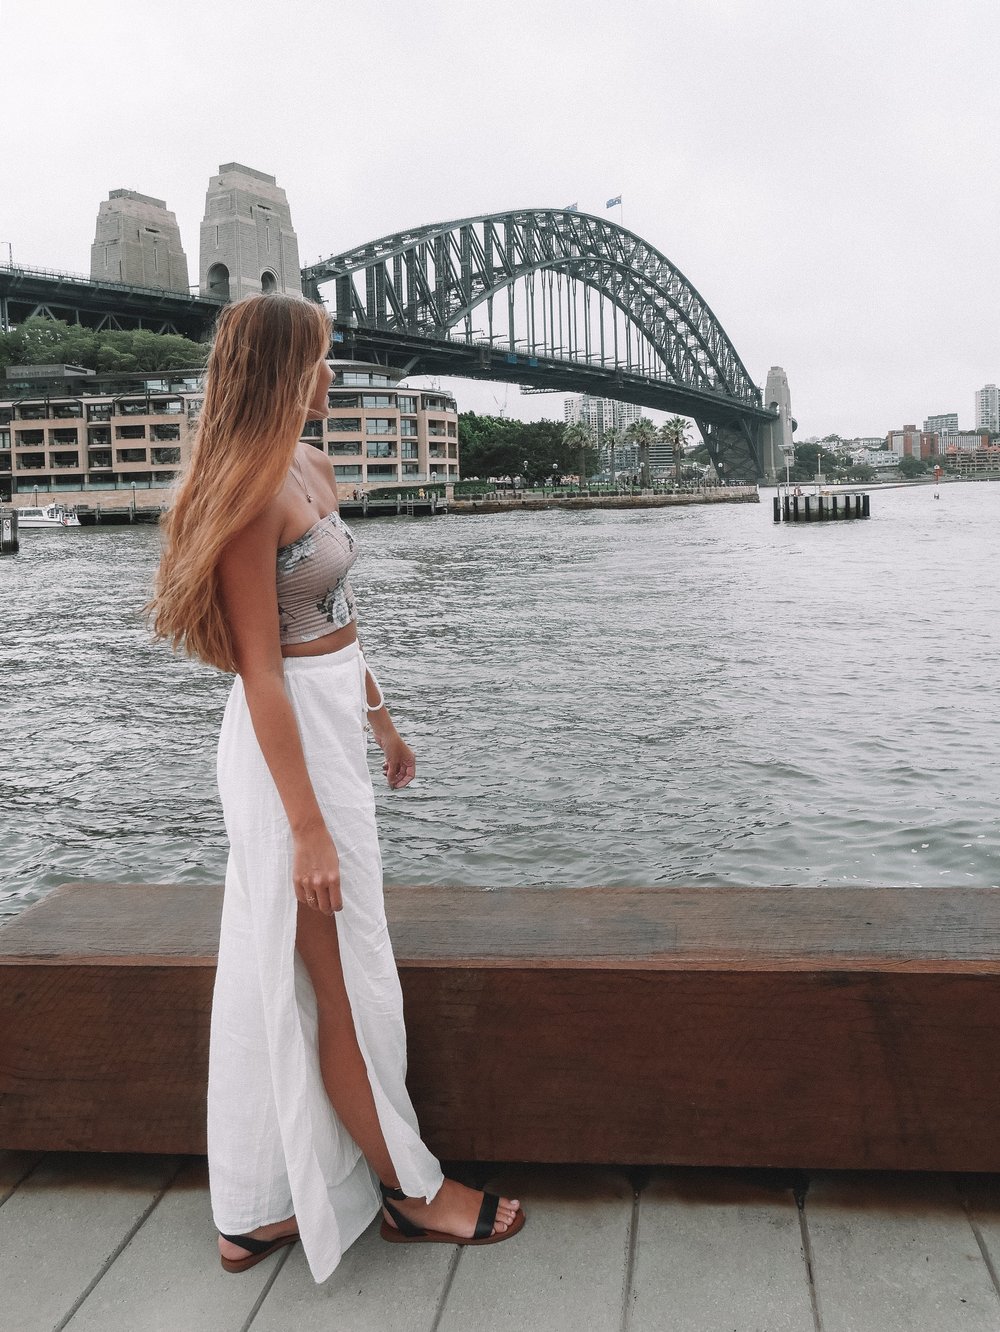 The Harbour Bridge - Sydney - New South Wales (NSW) - Australia